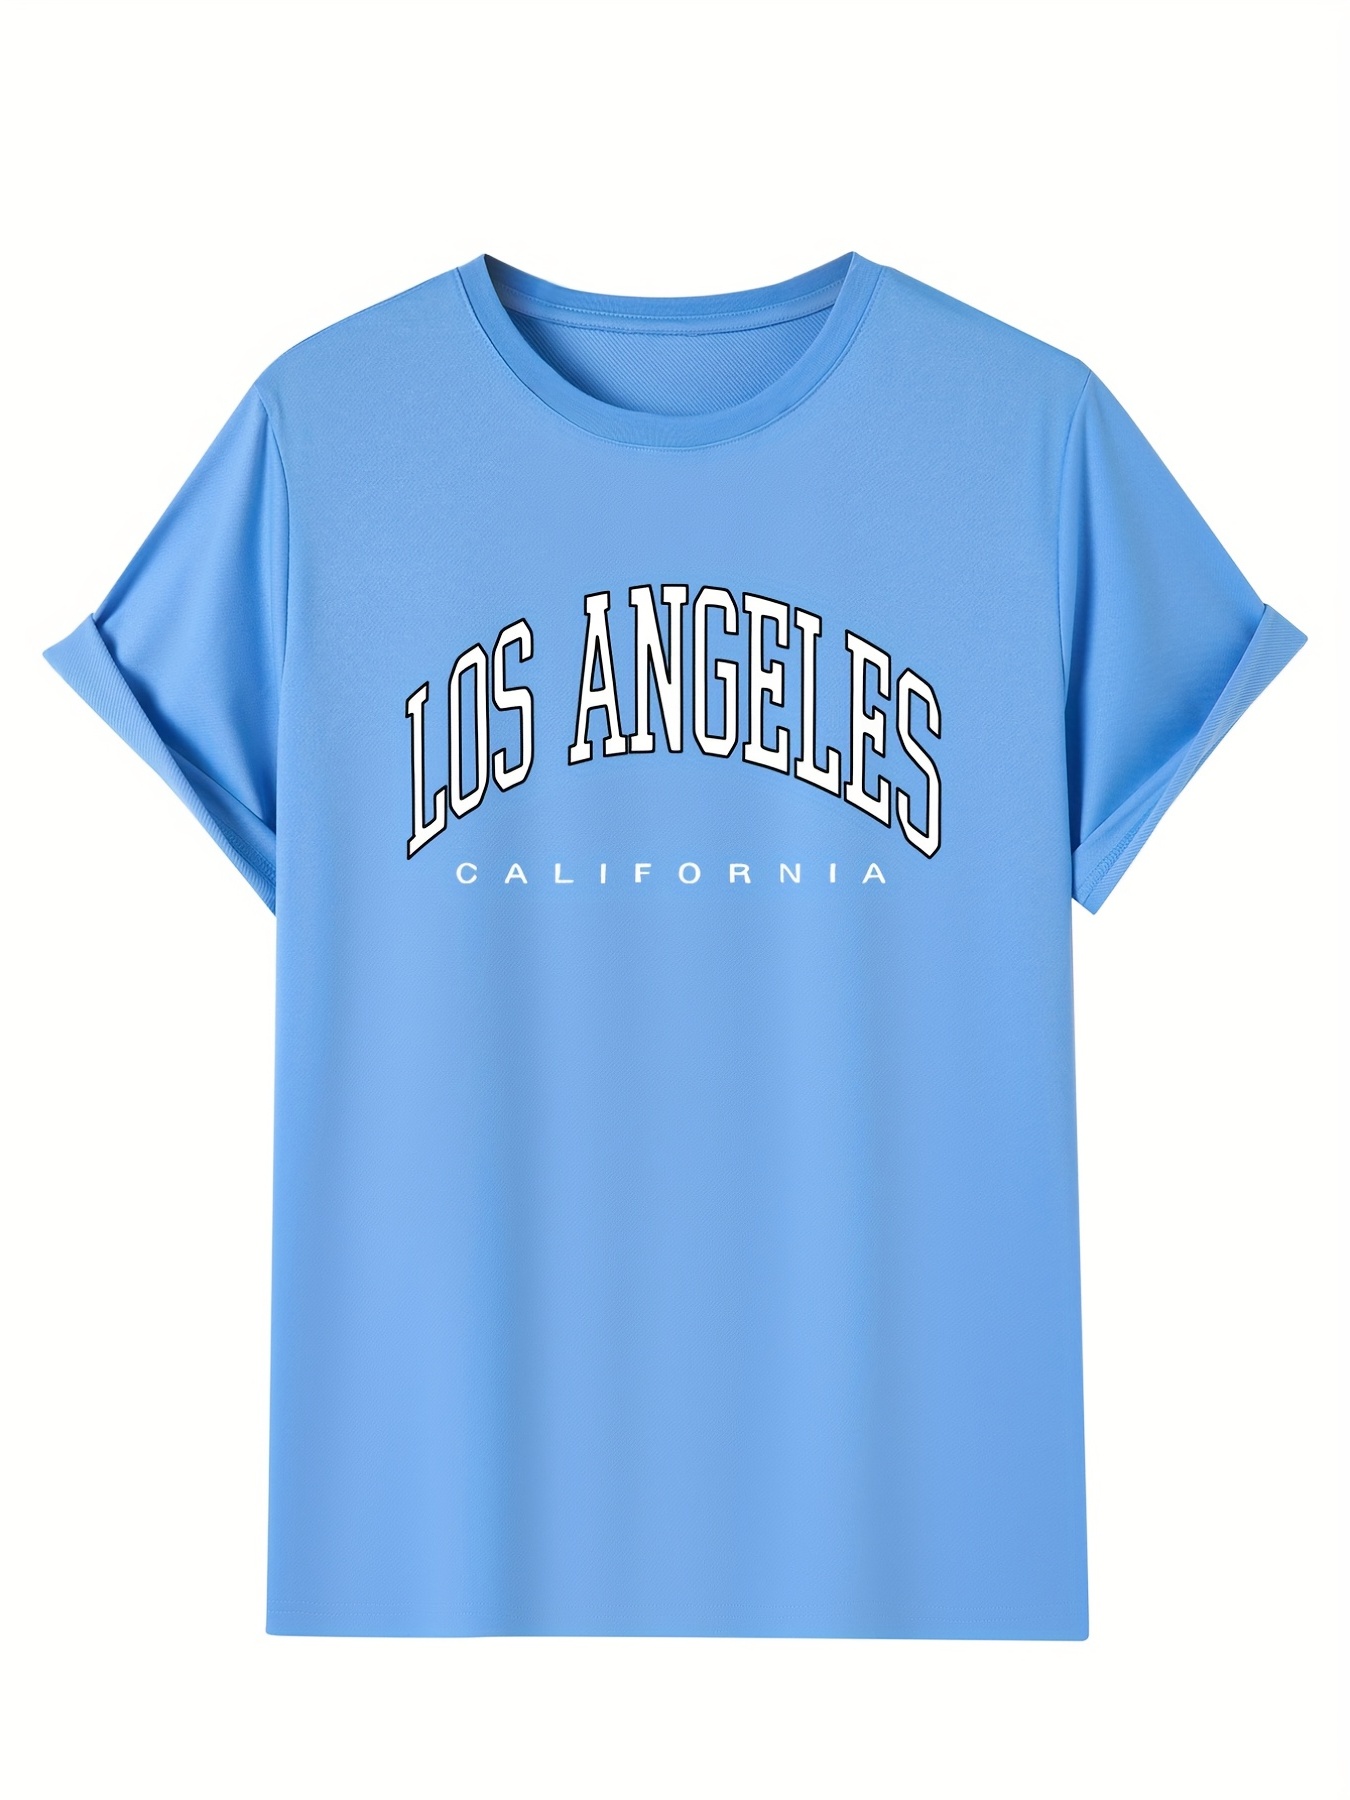 Classic Los Angeles California Blue T-Shirt